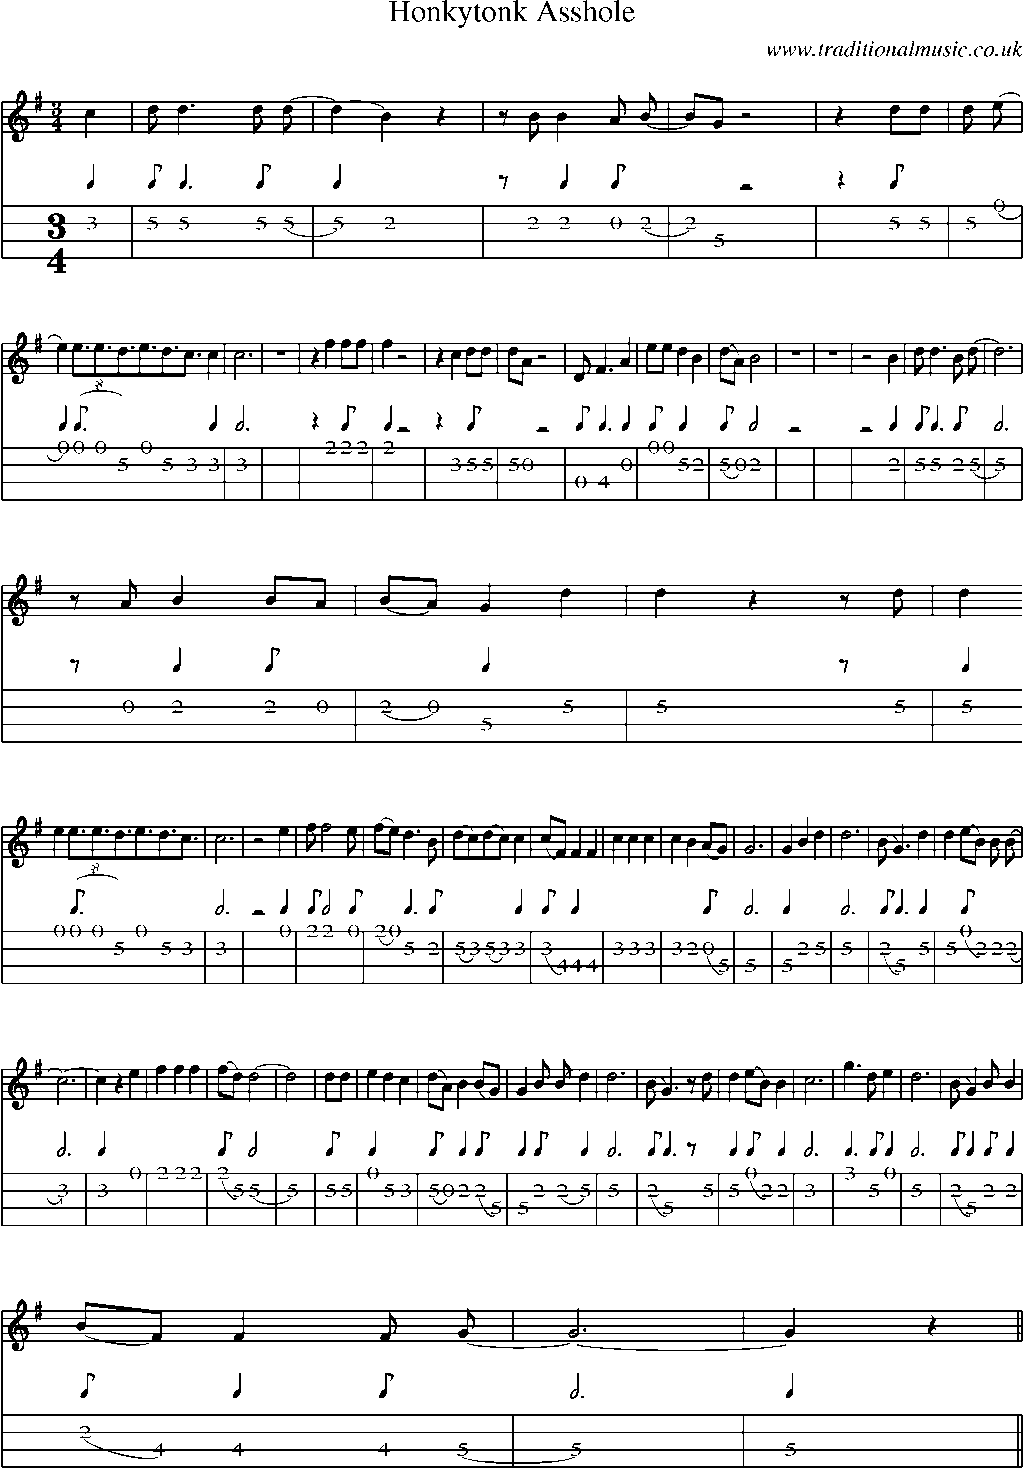 Mandolin Tab and Sheet Music for Honkytonk Asshole